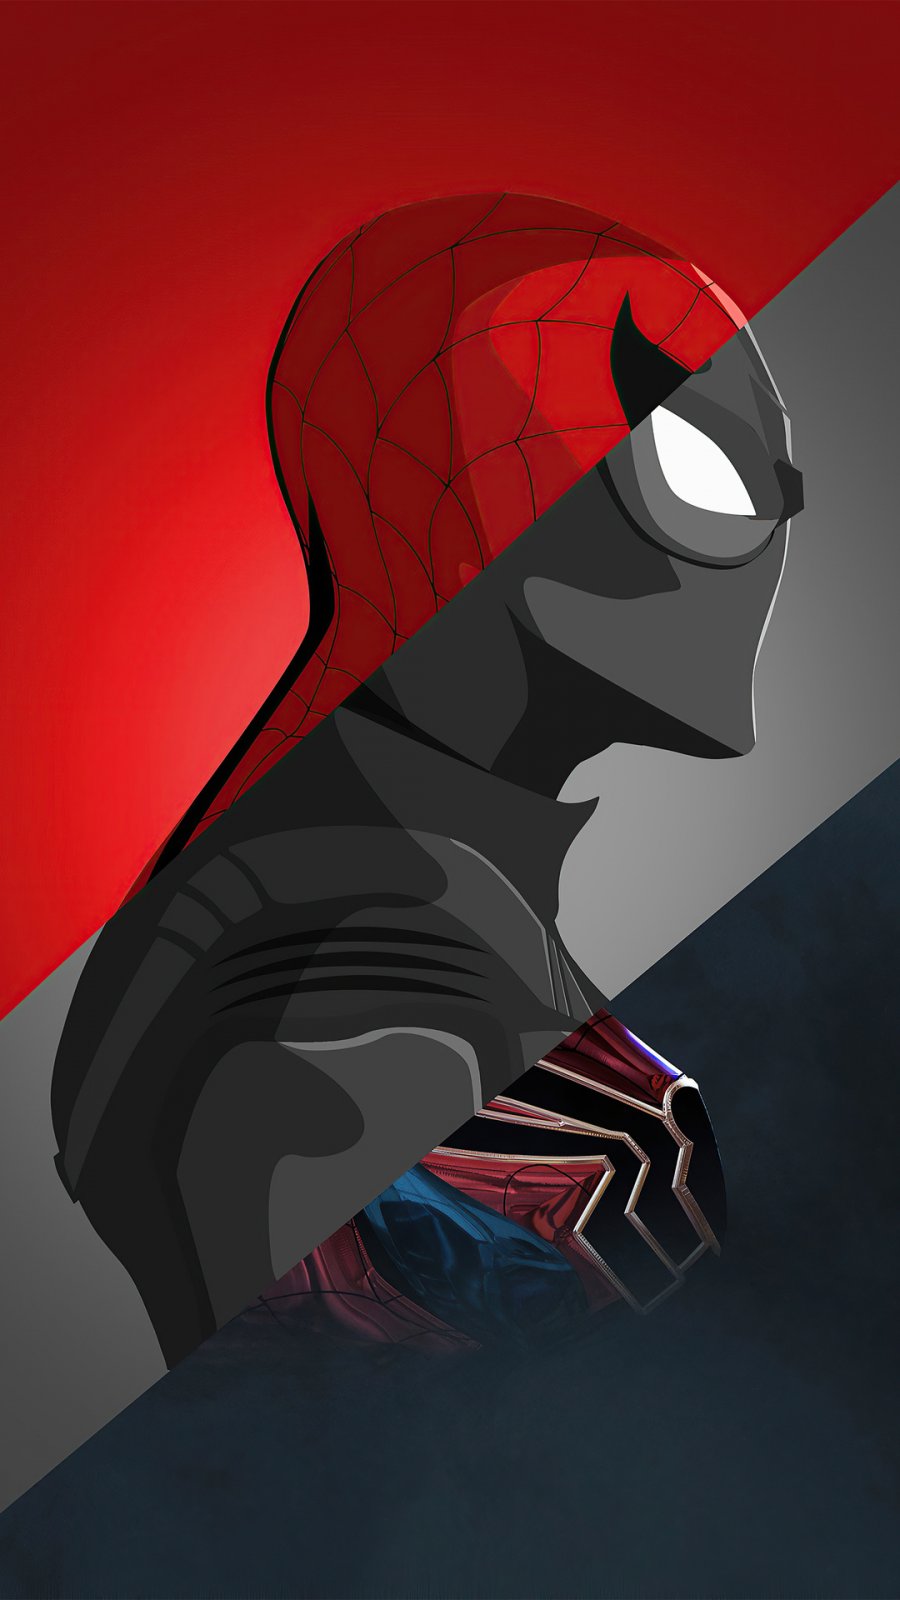 Spiderman 5K - IPhone Wallpapers : iPhone Wallpapers